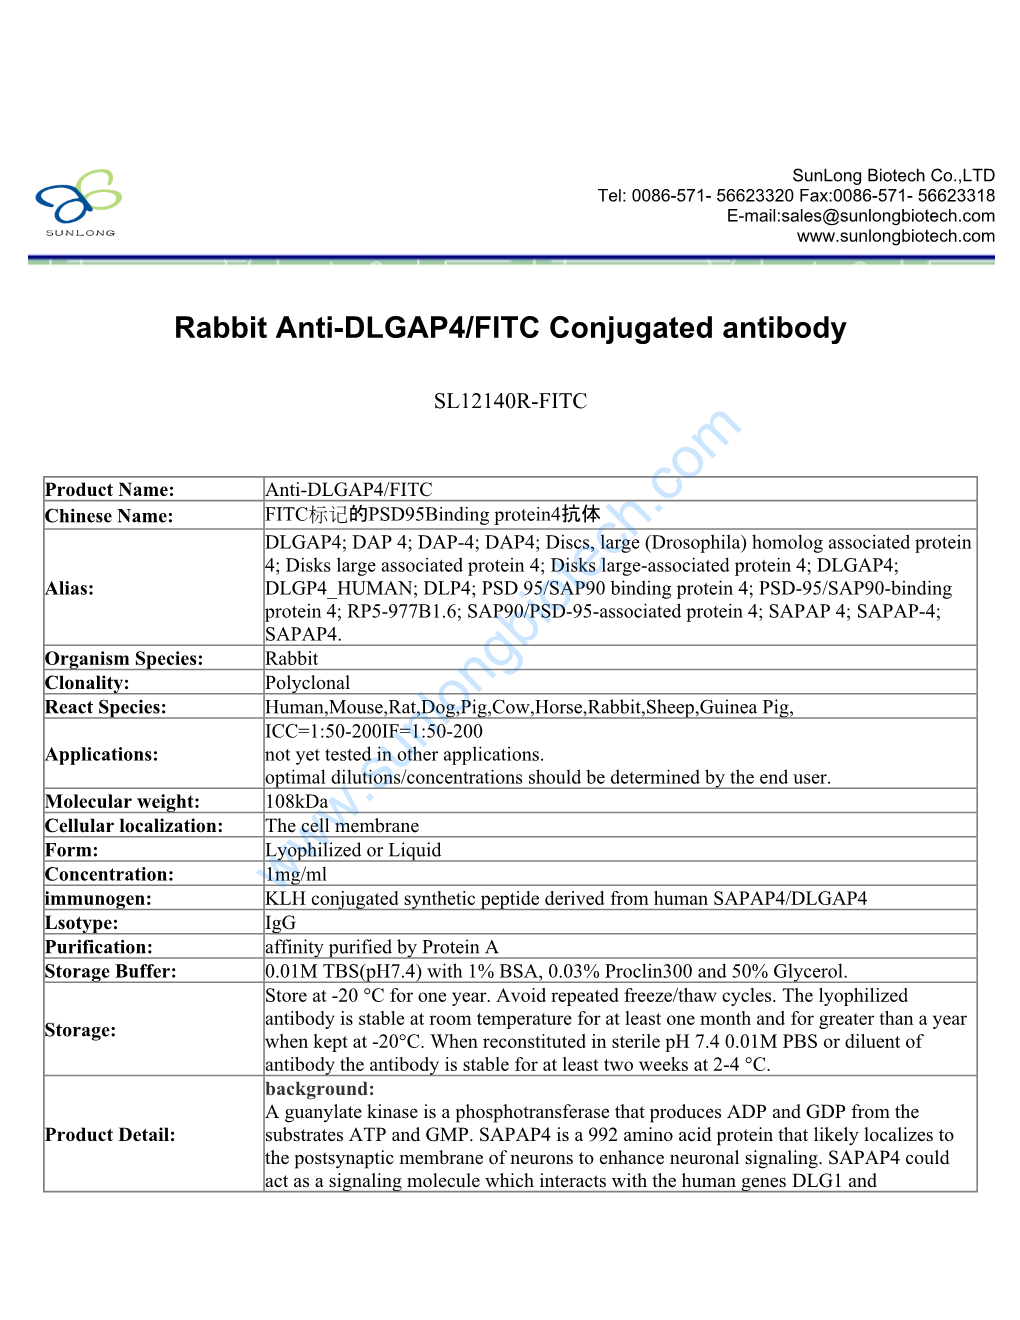 Rabbit Anti-DLGAP4/FITC Conjugated Antibody